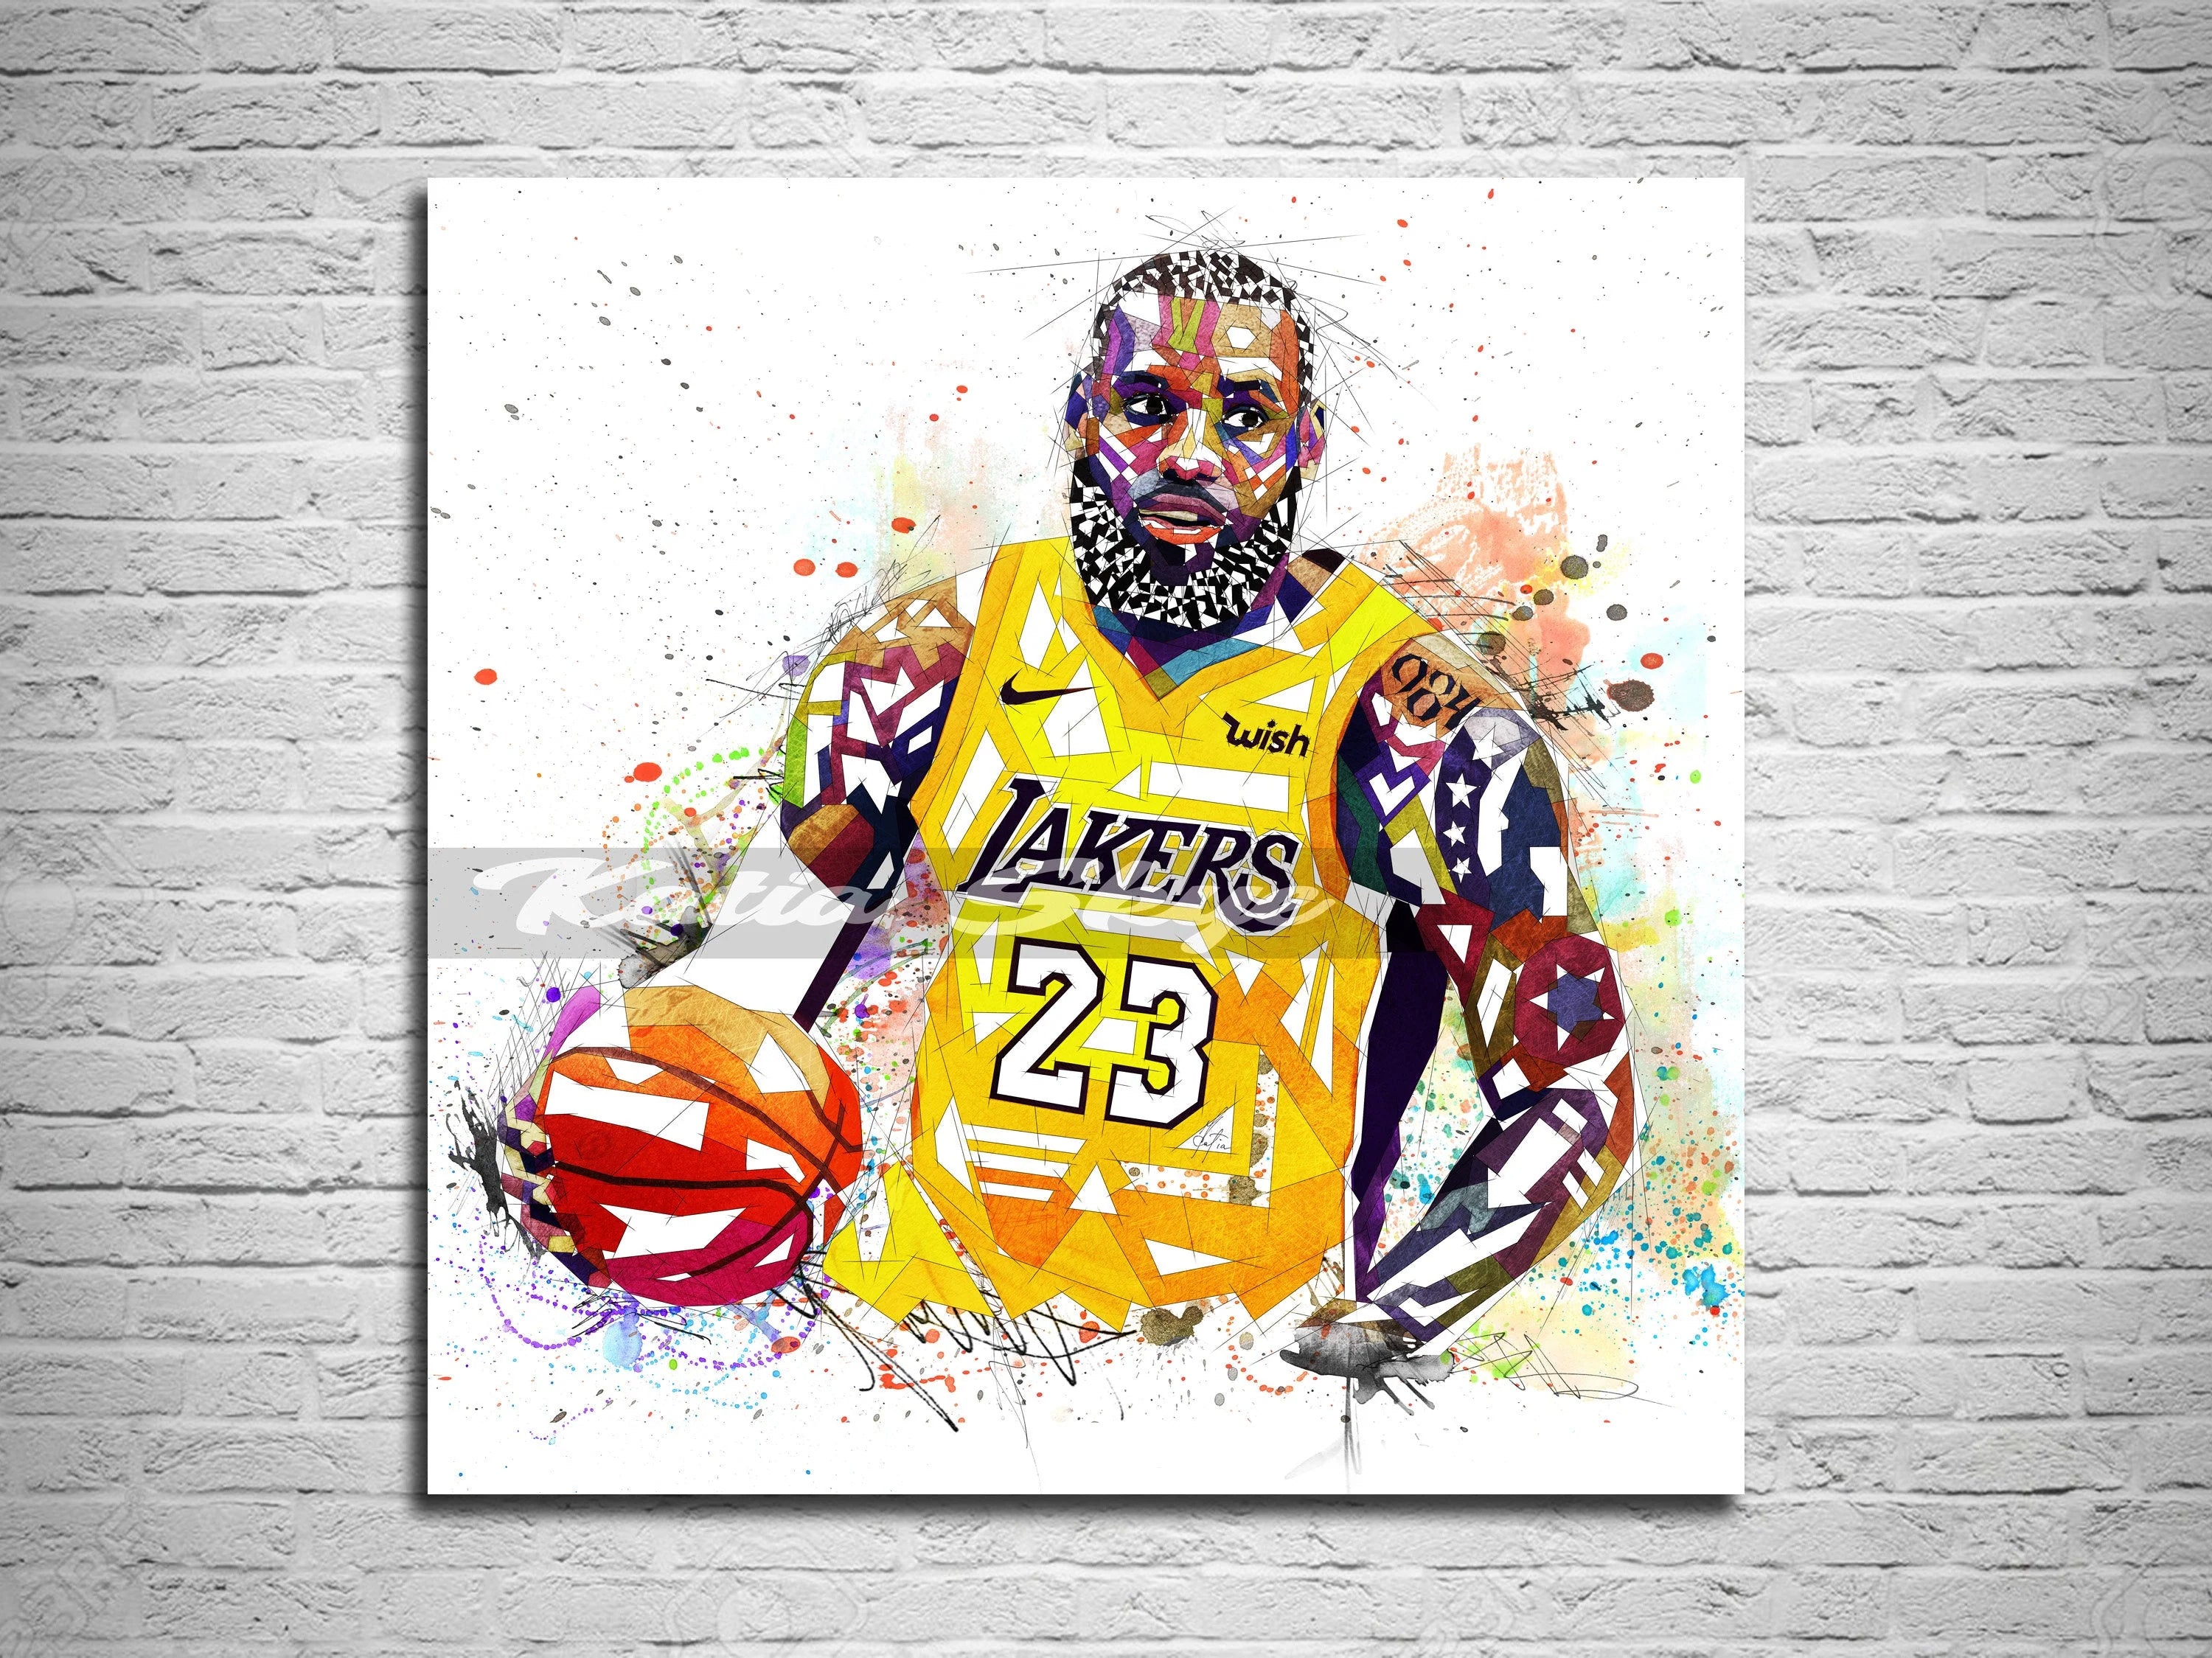 Abstract Canvas Wall Art Lebron James Poster Basketball Wall Art Sports Poster // NBA-LJ03